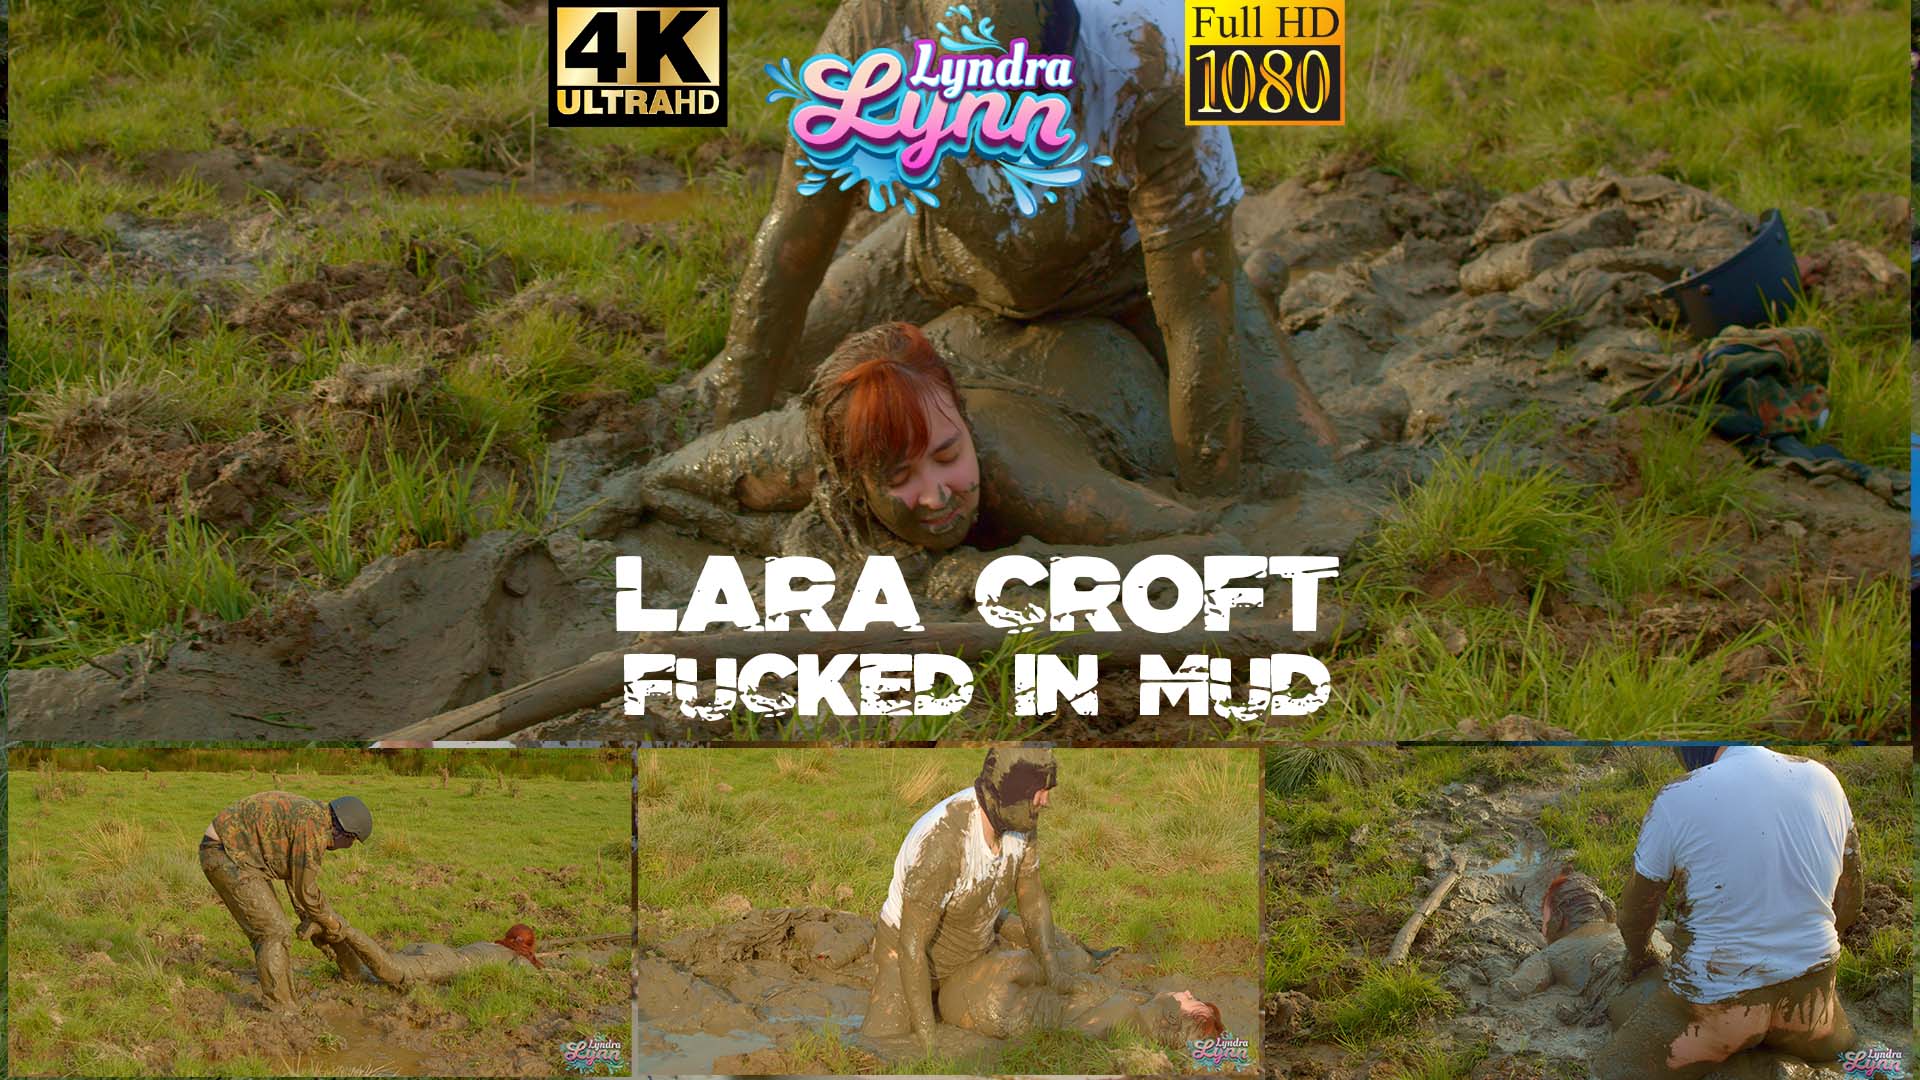 Lara Croft fucked in mud